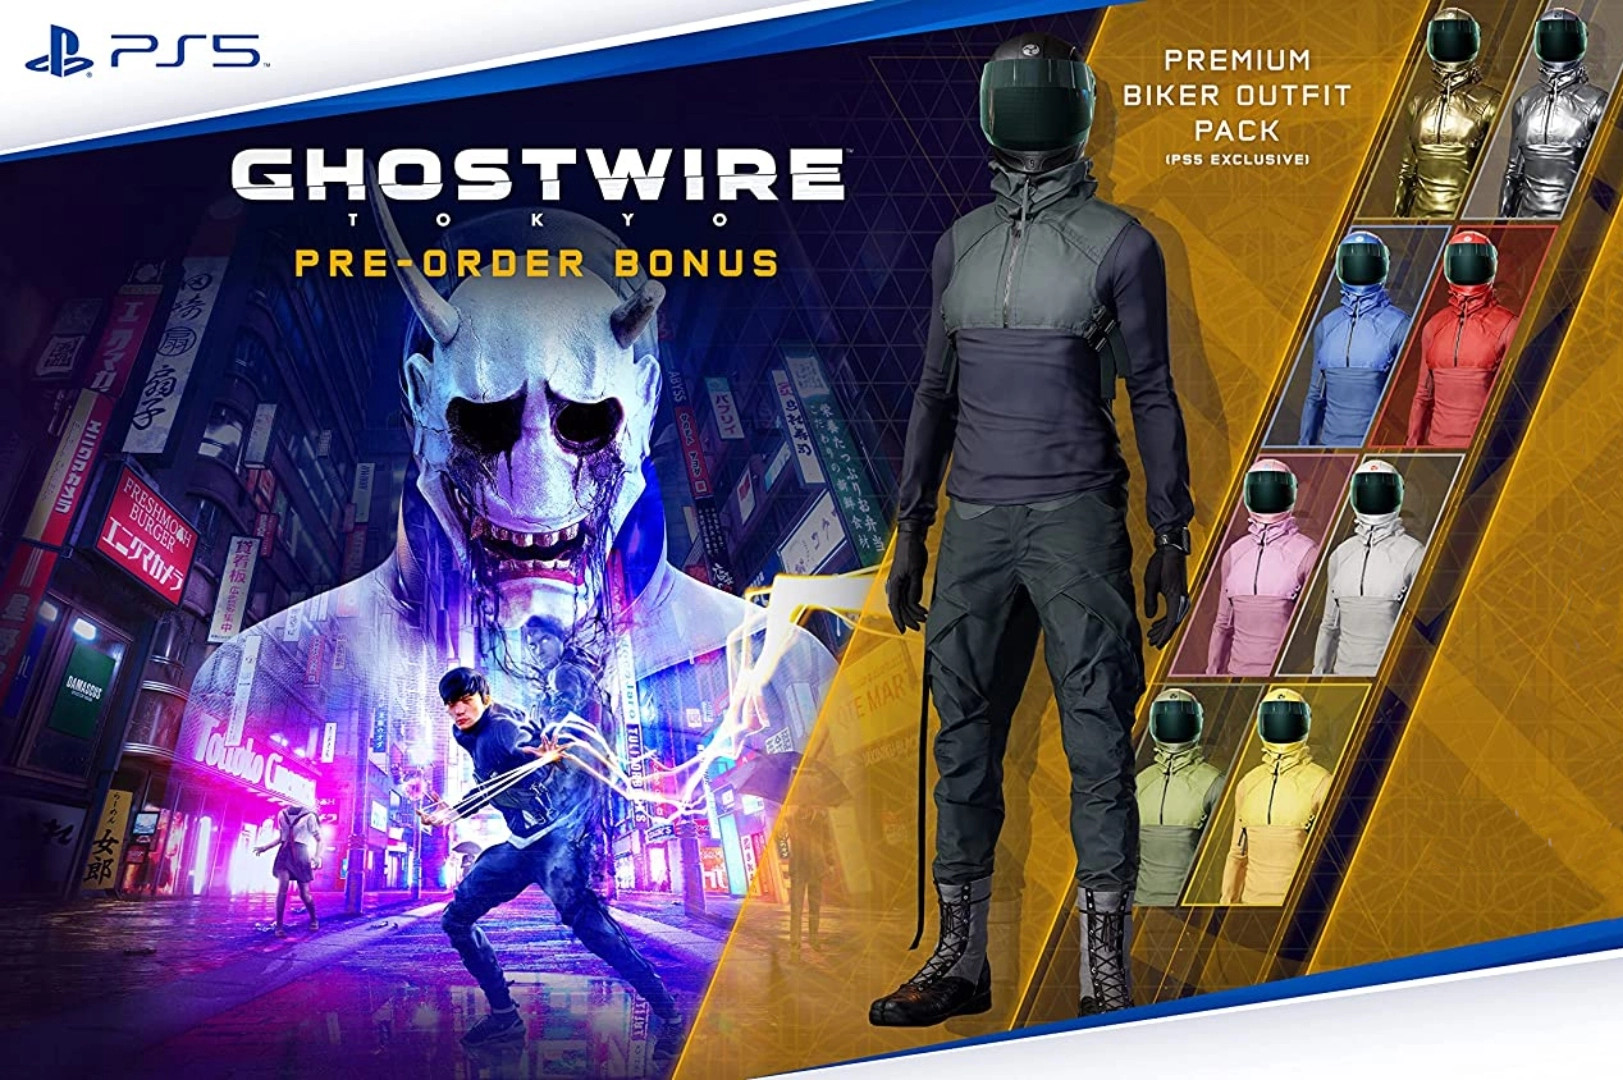 GhostWire: Tokyo - Premium Biker Outfit Pack DLC EU PS5 CD Key, $4.51